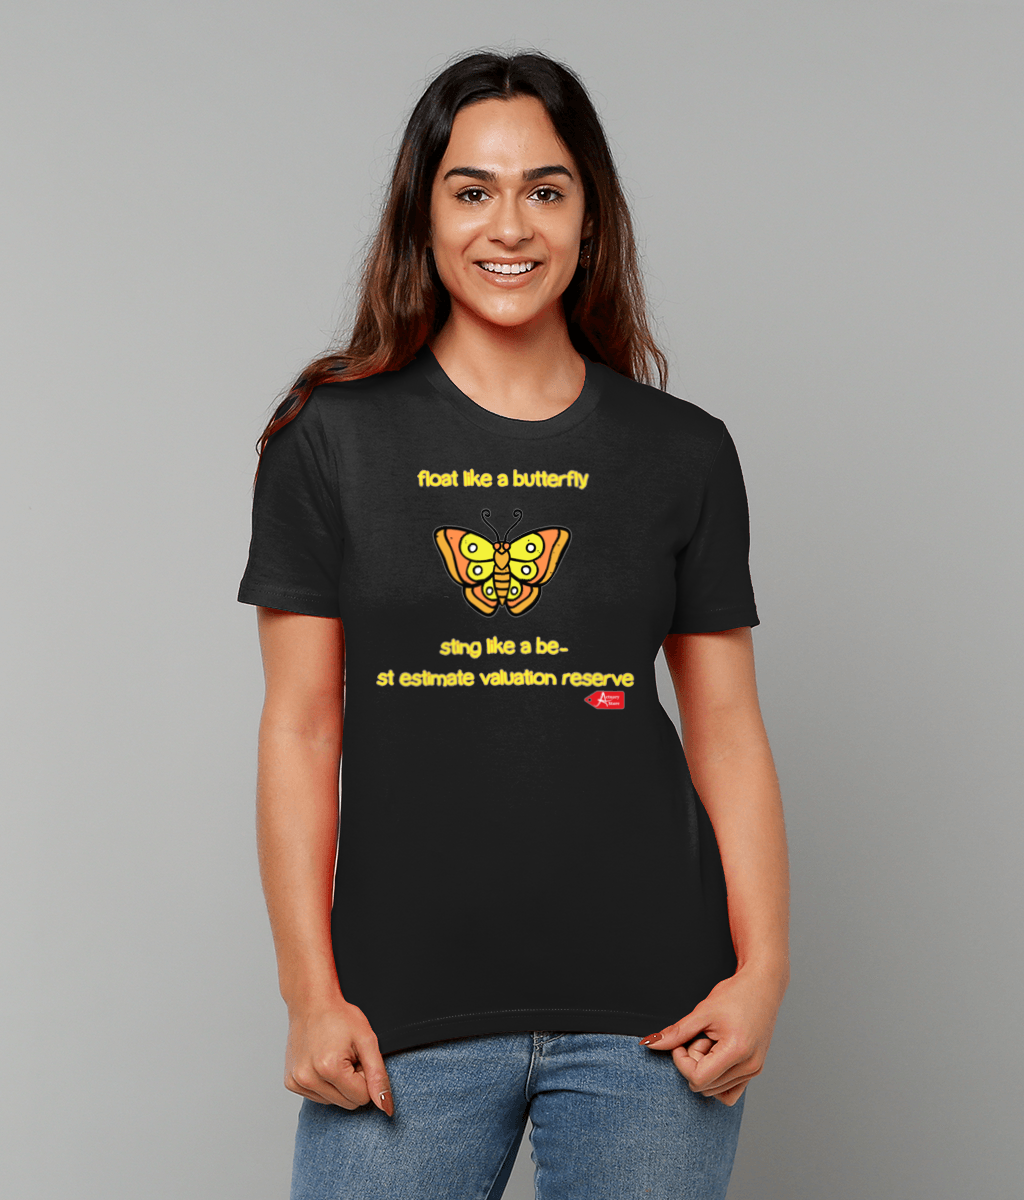 Float Like A Butterfly T-Shirt